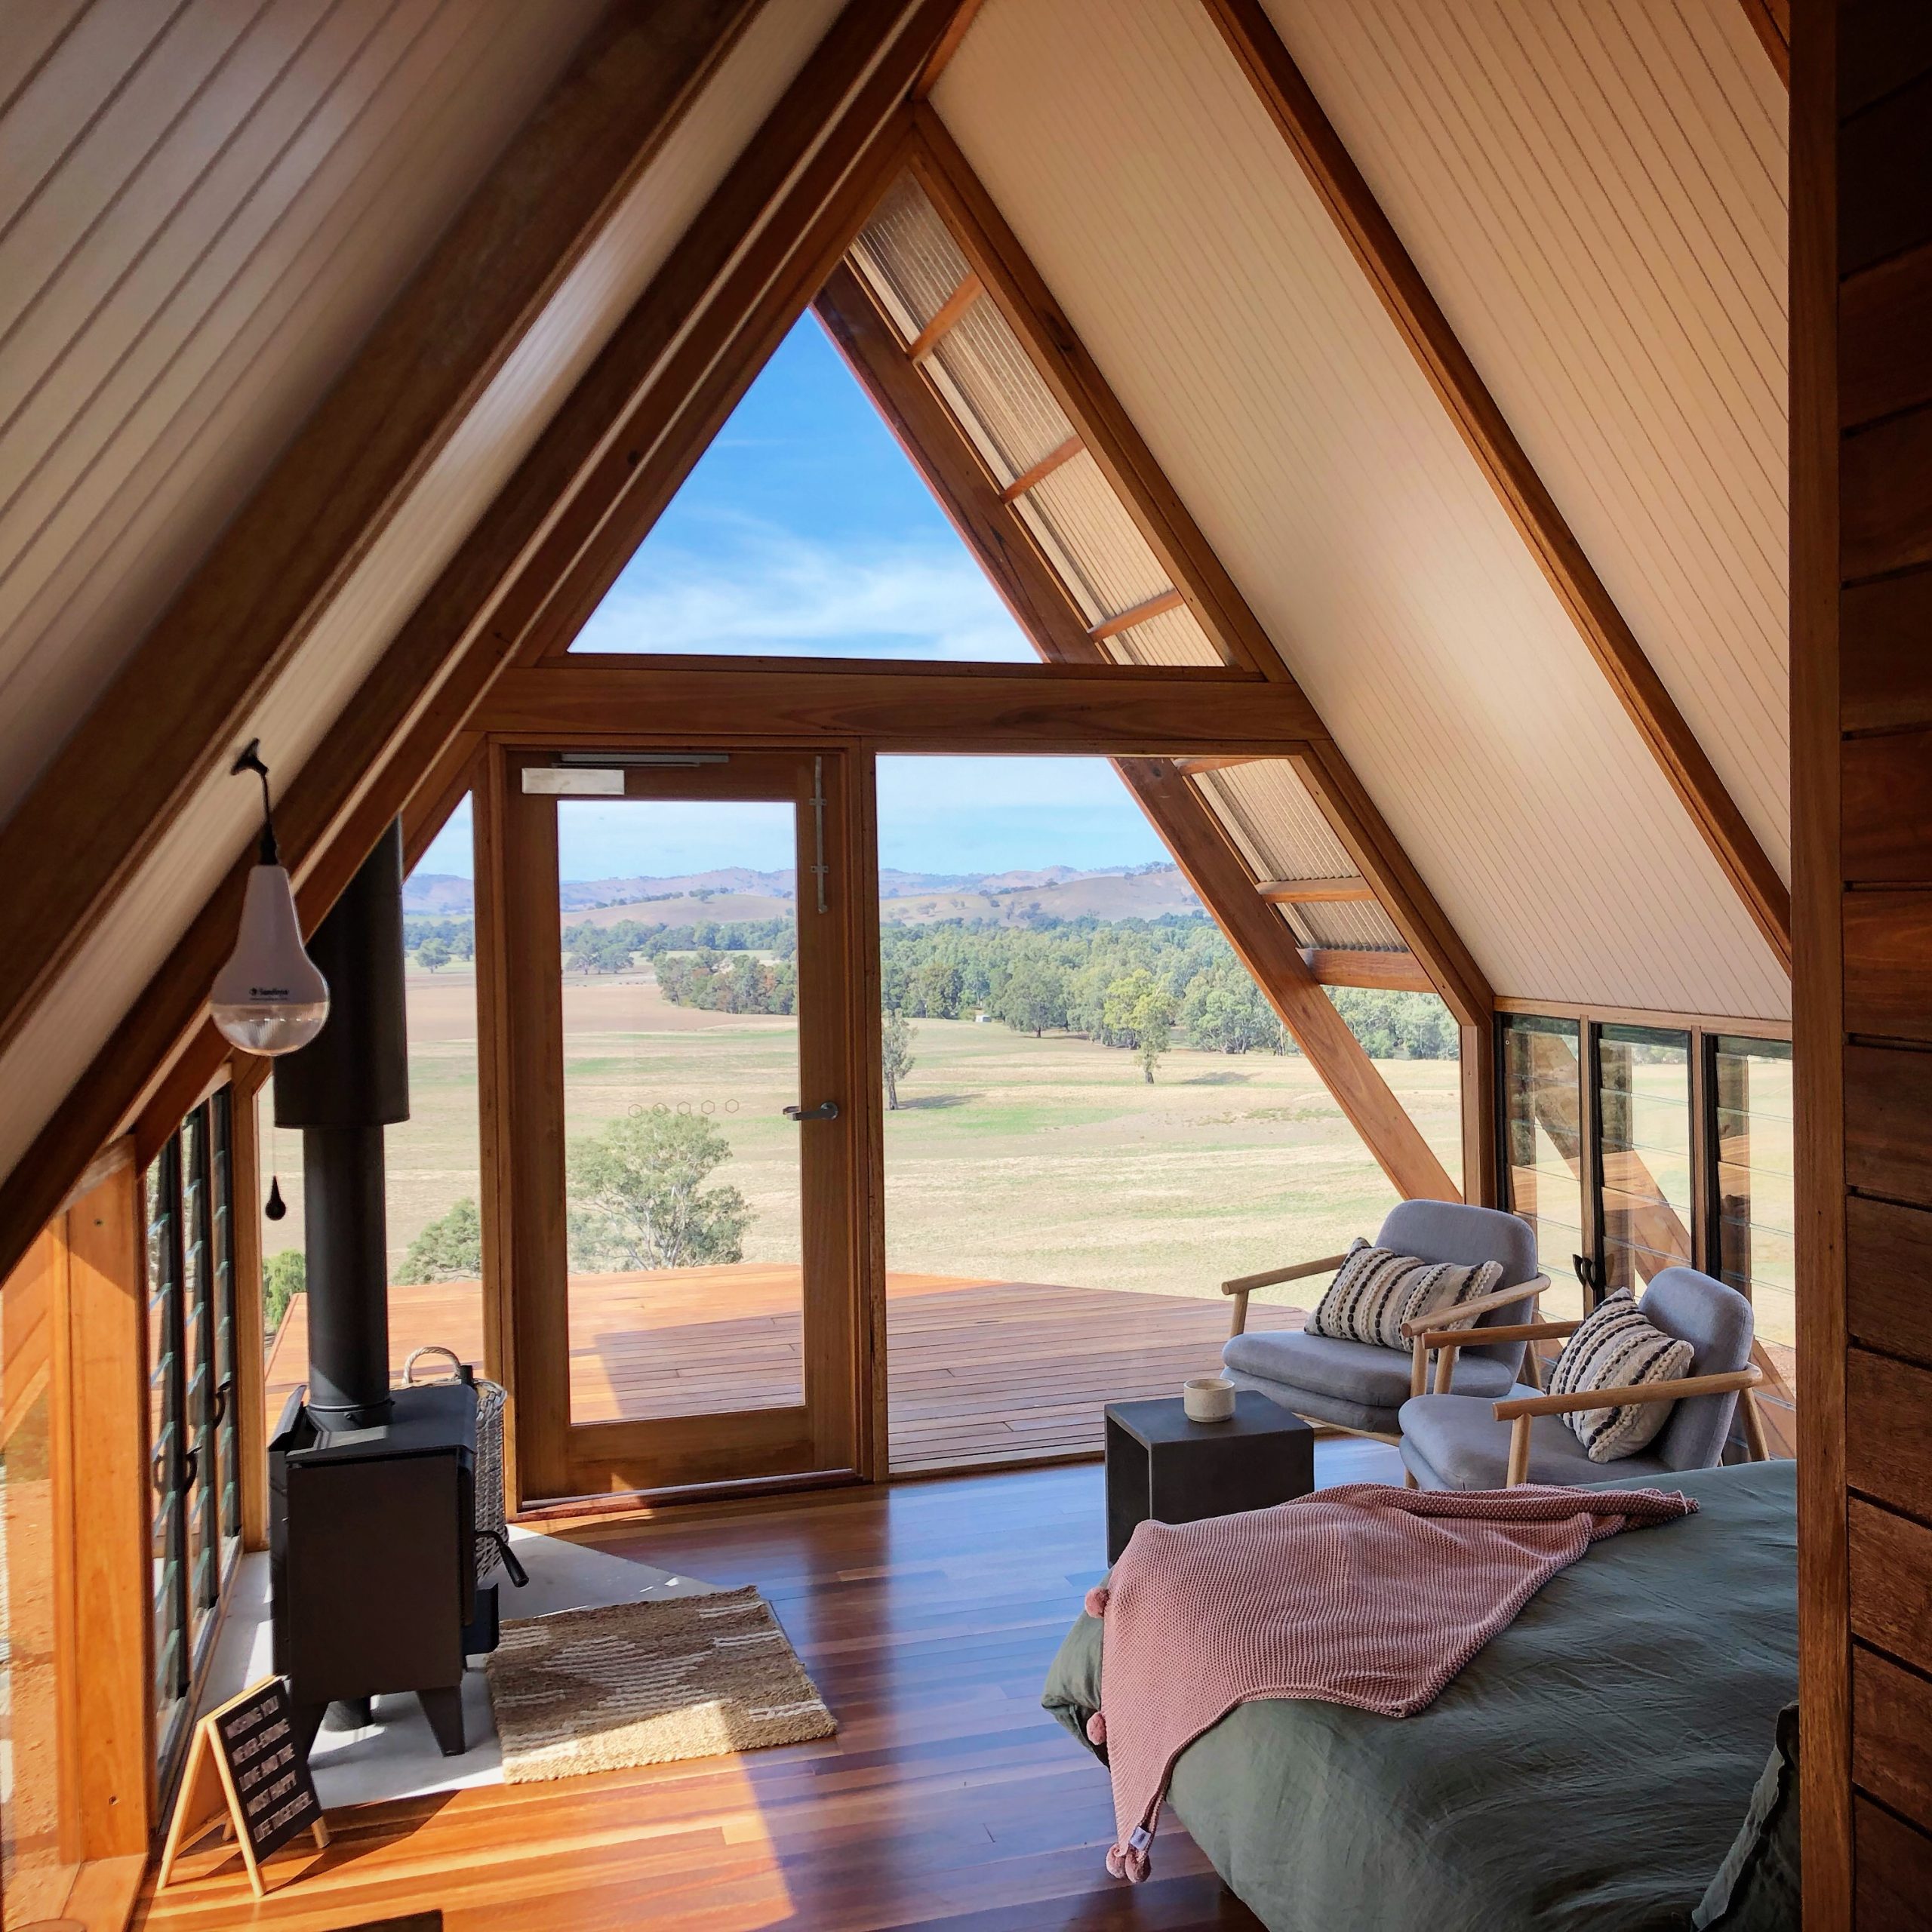 interior of Fergo's hut at Kimo Estate with beautiful vies of the Australian landscape